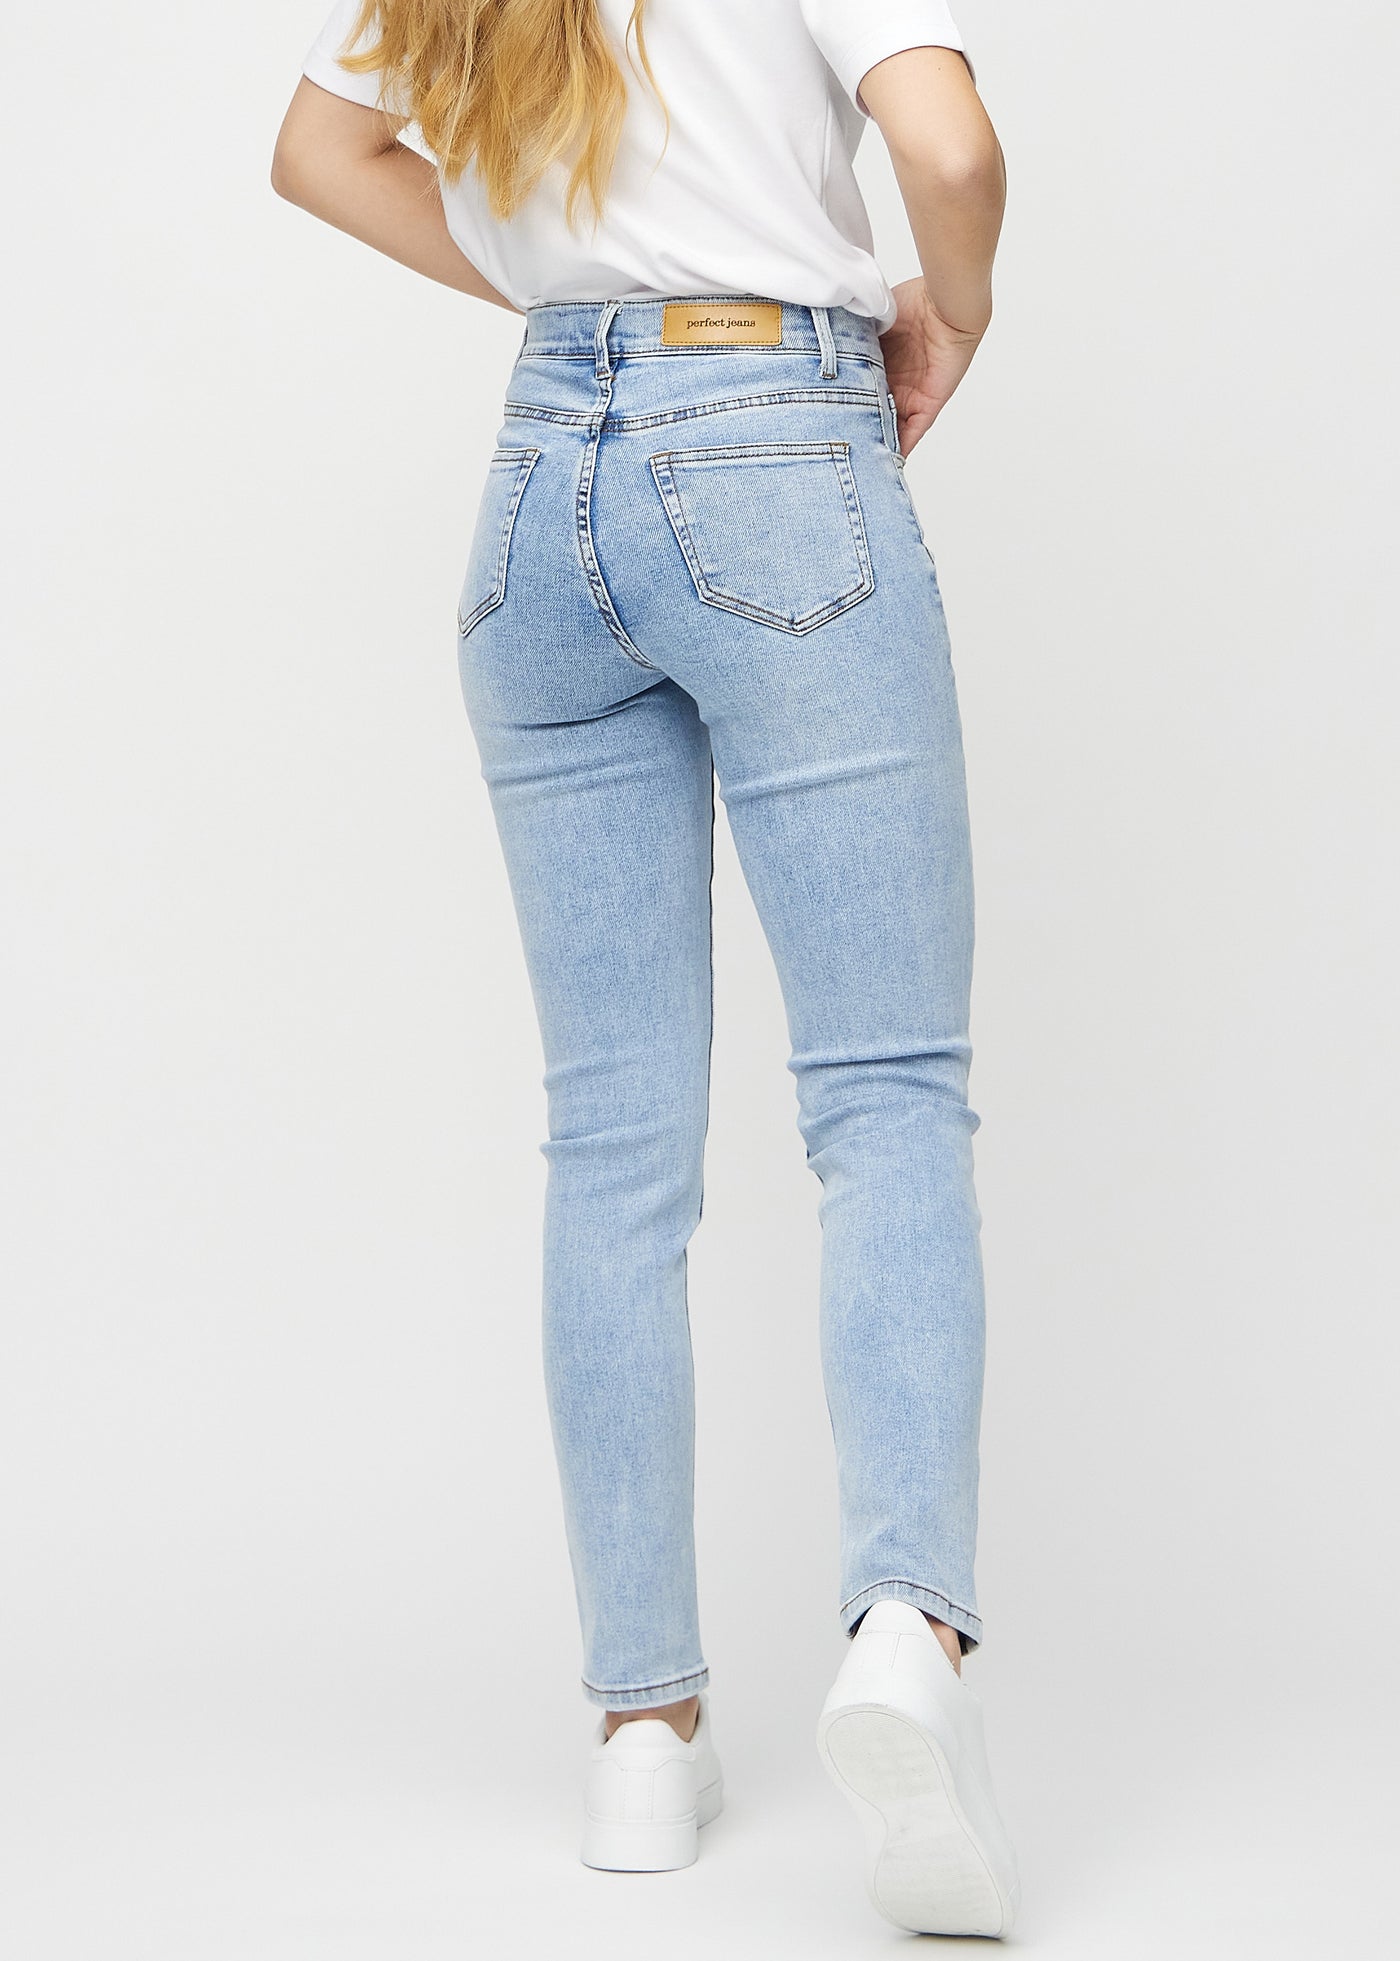 Lys denim slim jeans set bagfra, så man kan se hele produktet.